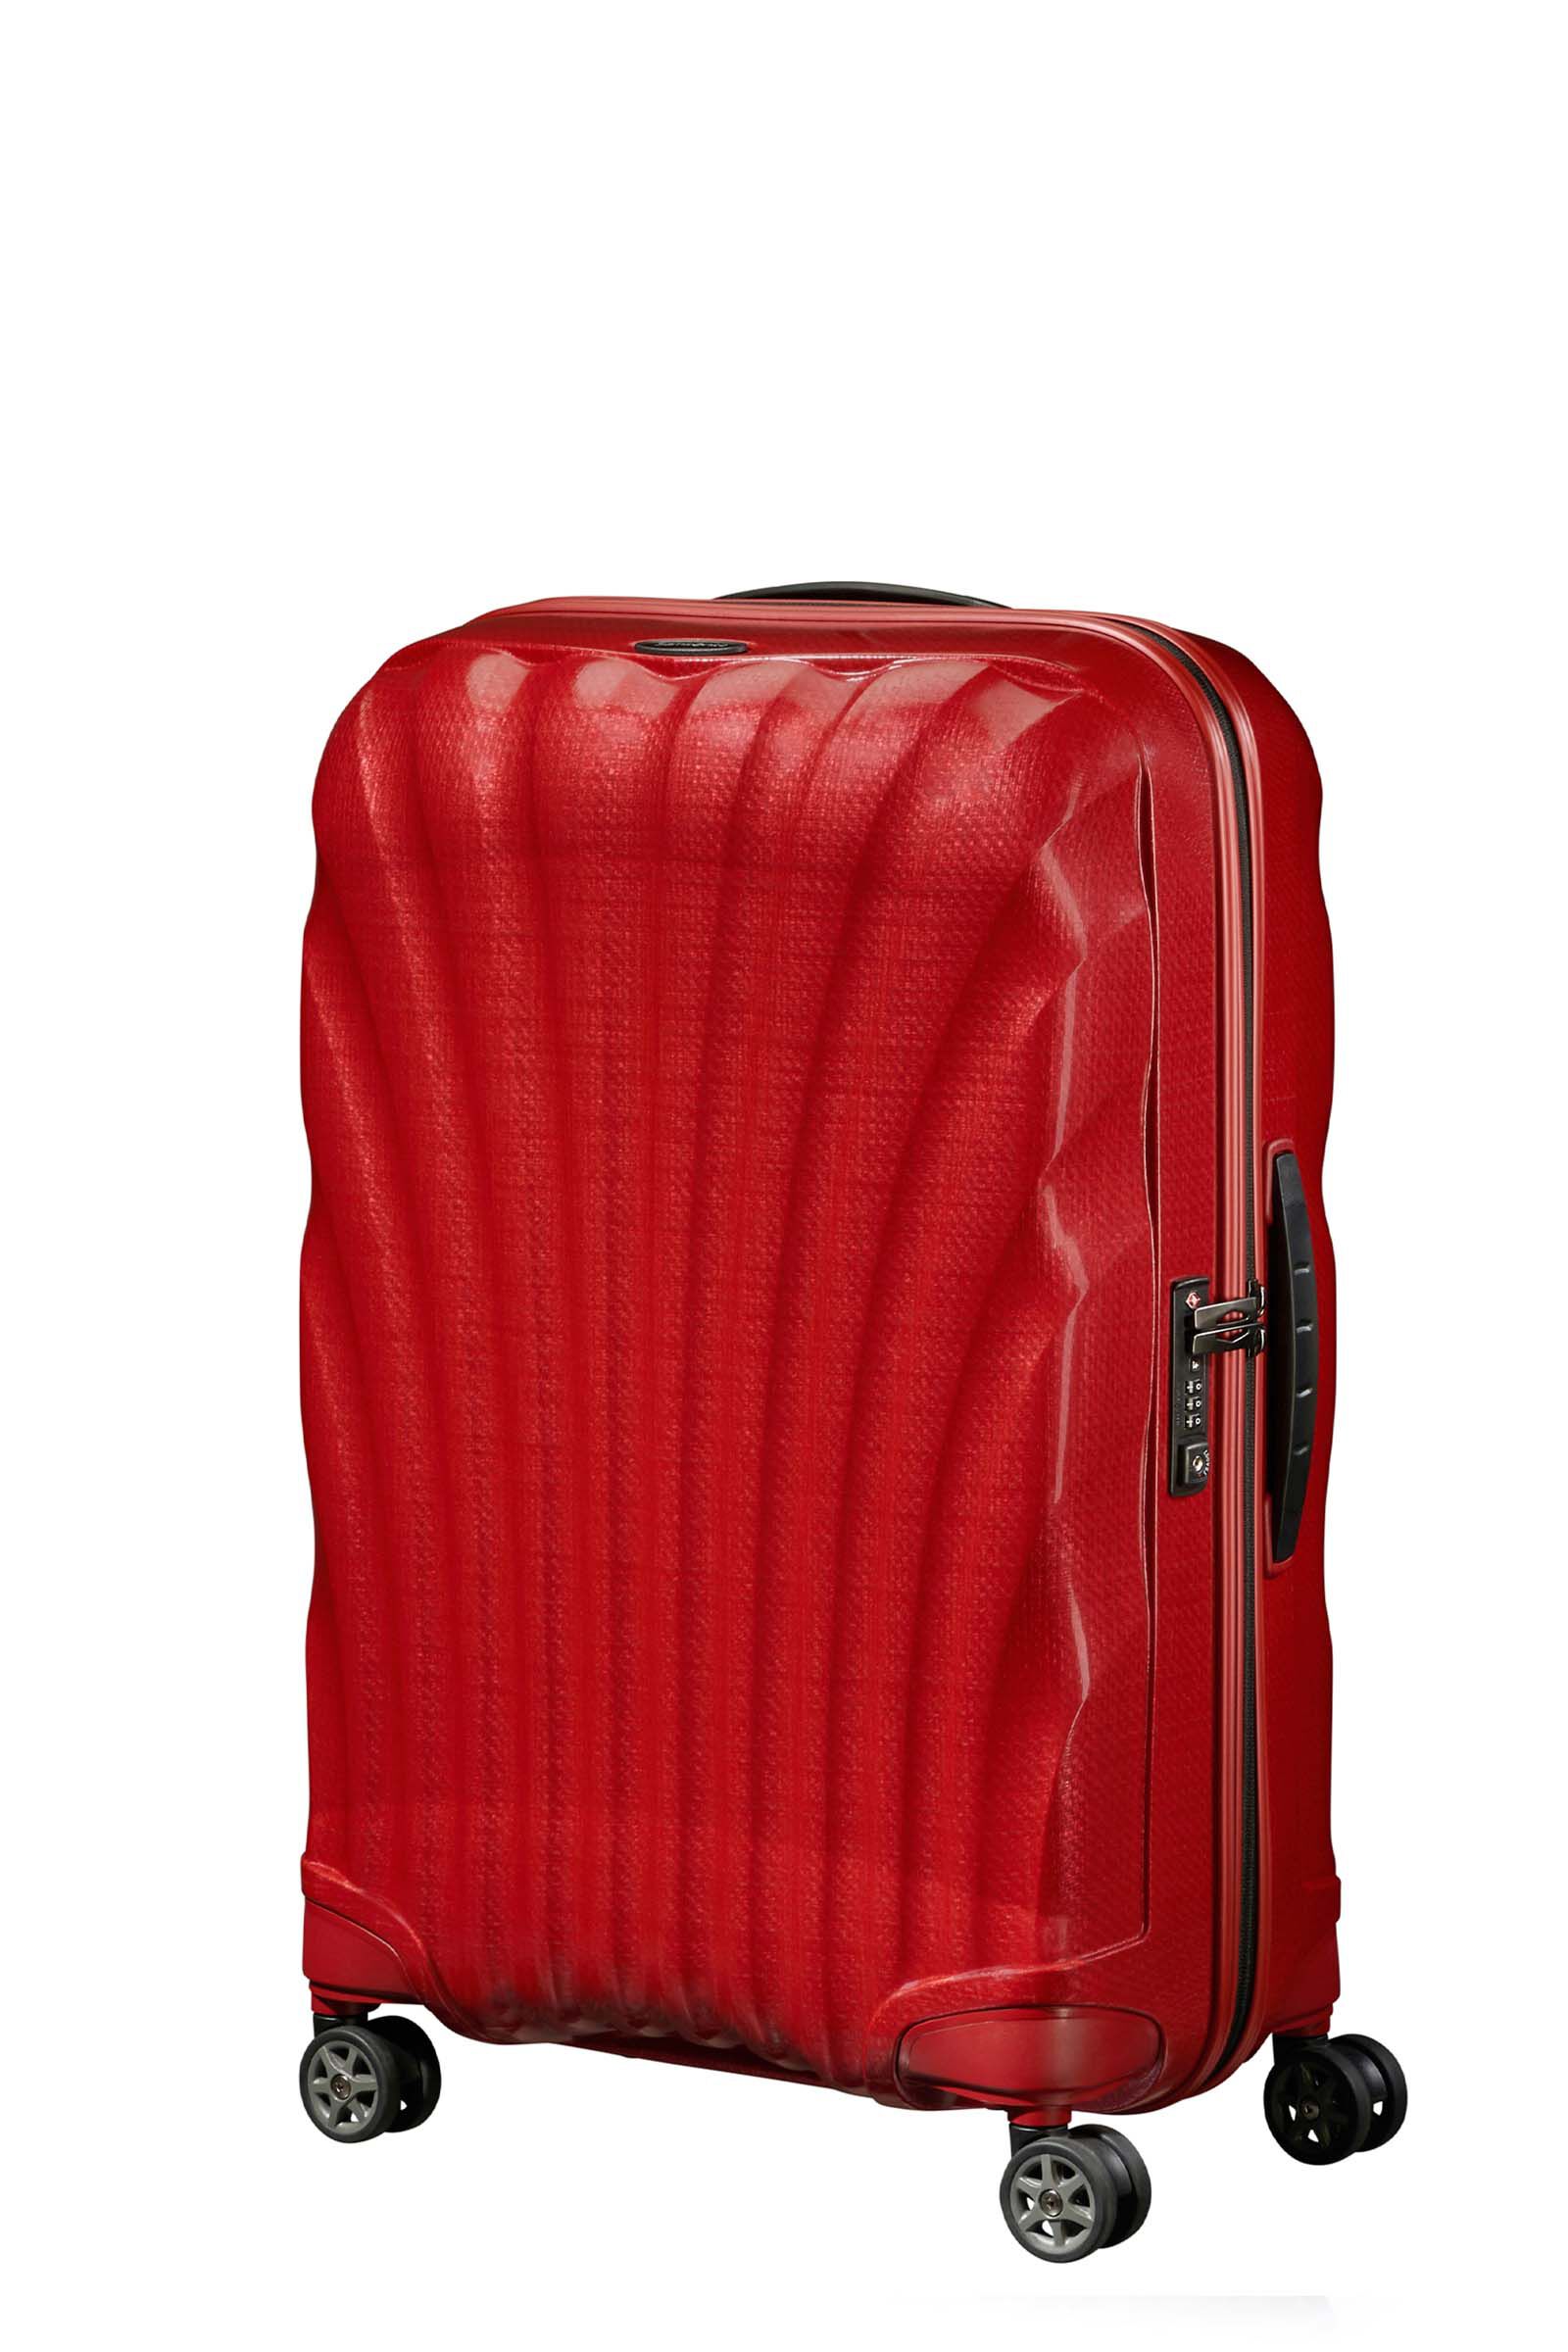 Samsonite サムソナイト スーツケース - バッグ、スーツケース